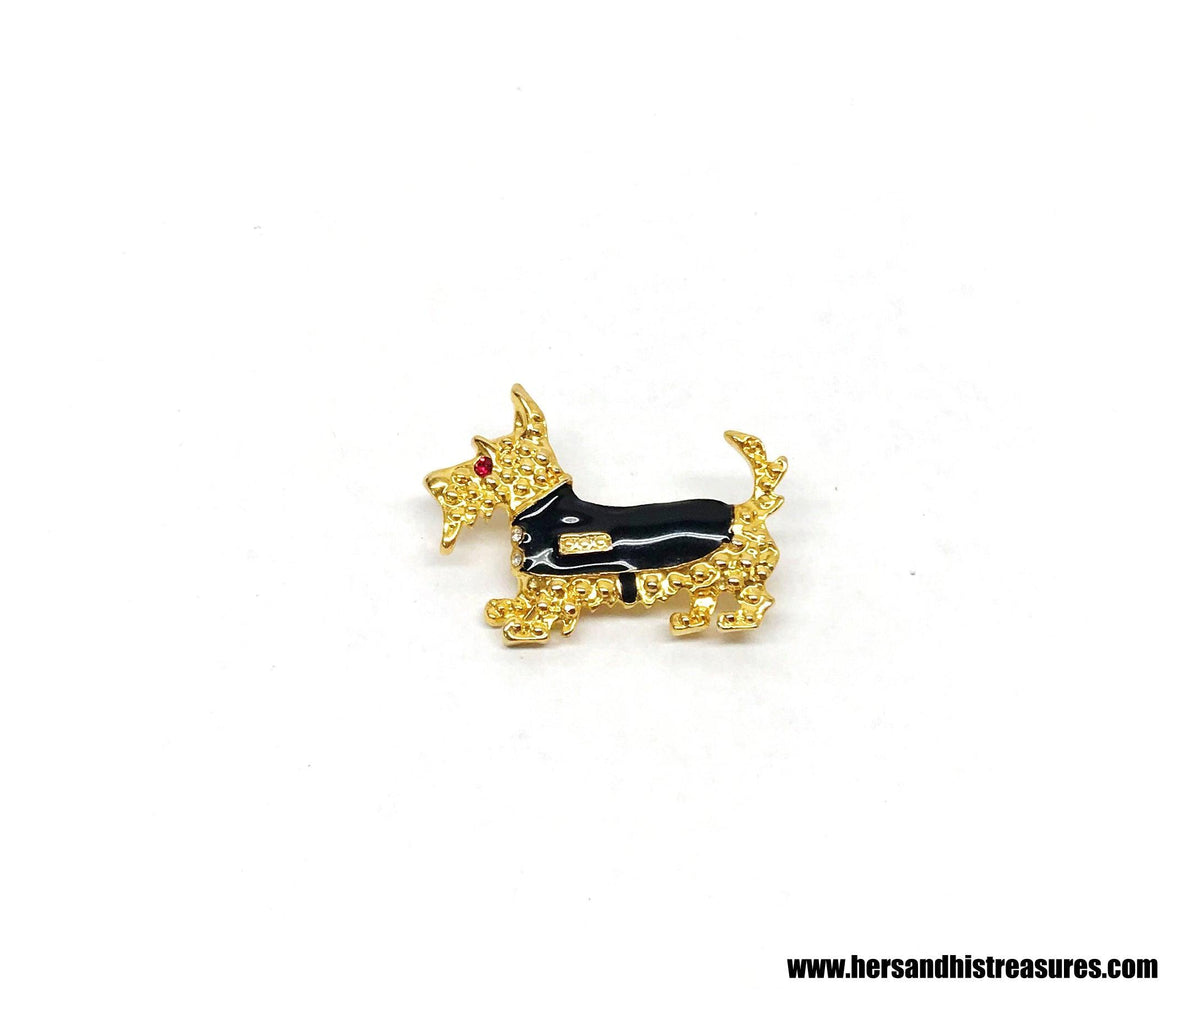 Schnauzer Dog Enamel & Rhinestone Gold Tone Brooch Pin - Hers and His Treasures